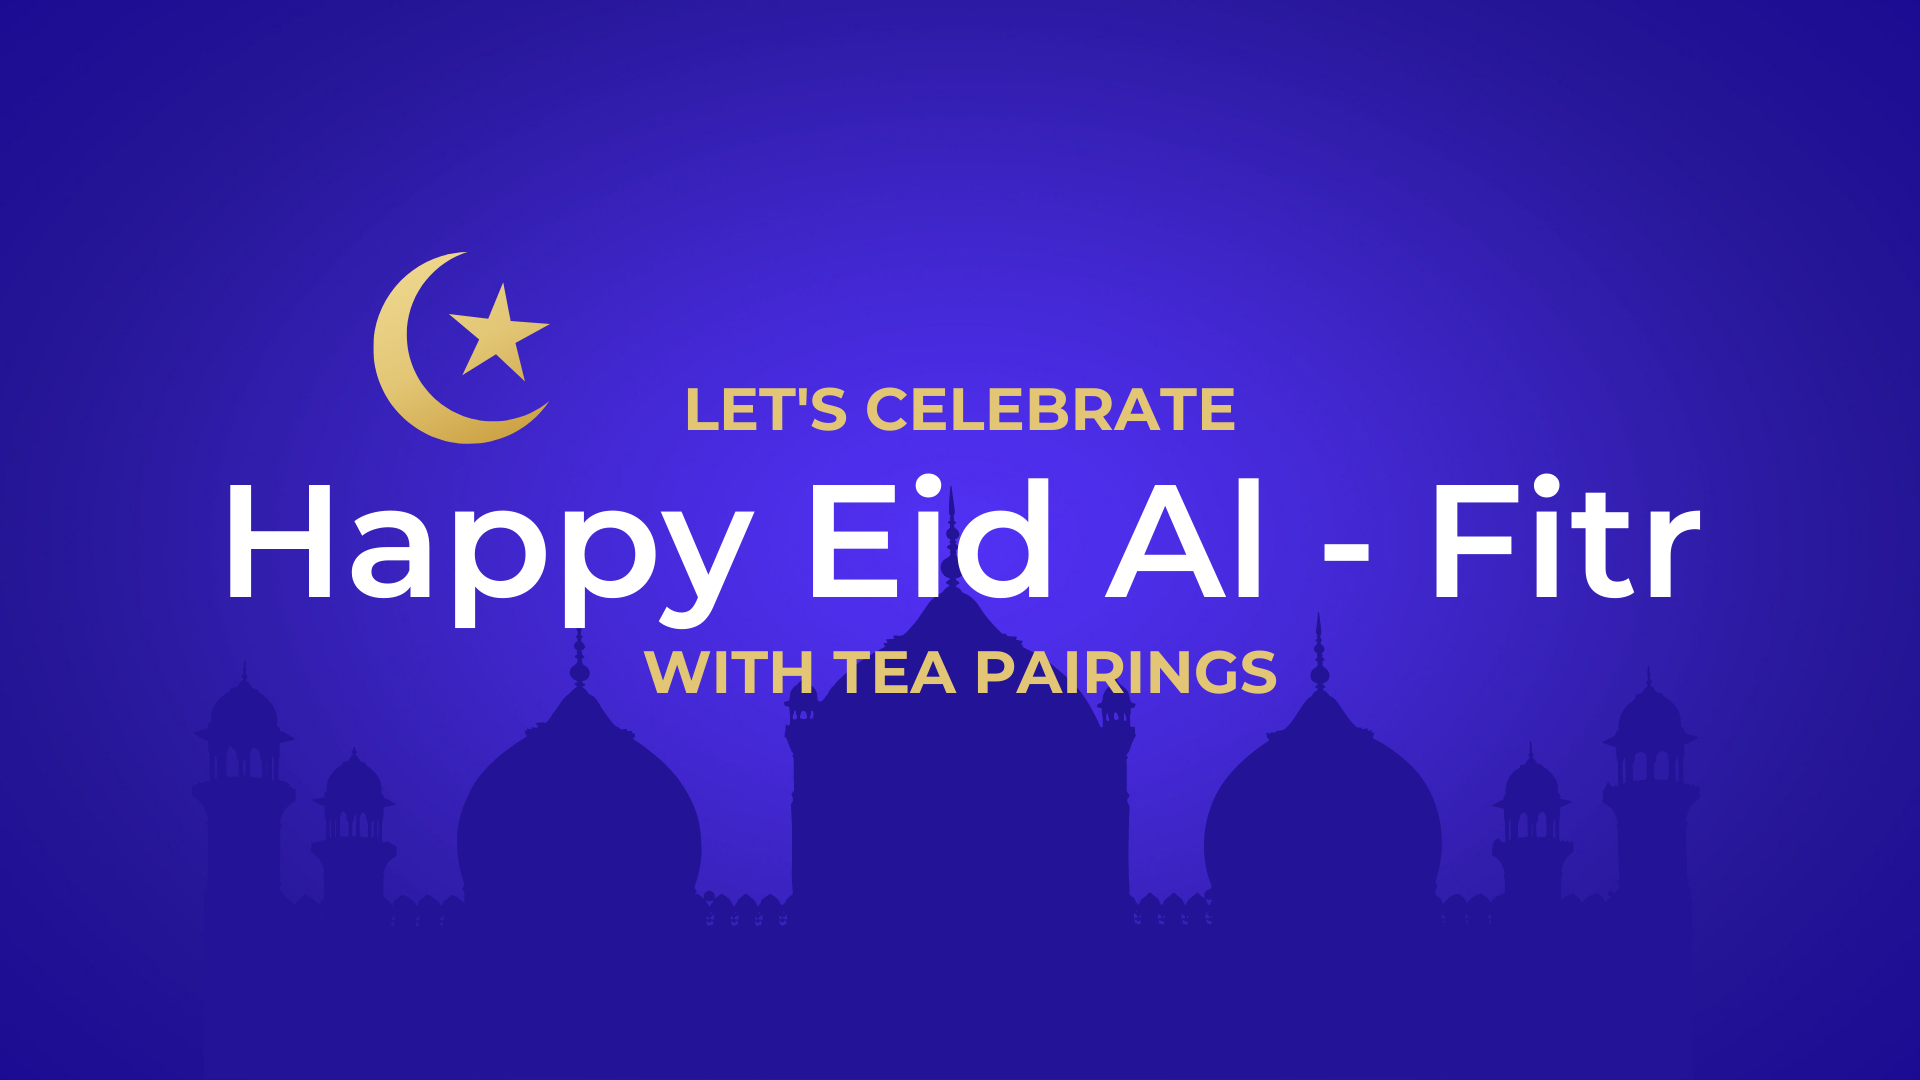 How to celebrate Eid al-Fitr with Tea Pairings